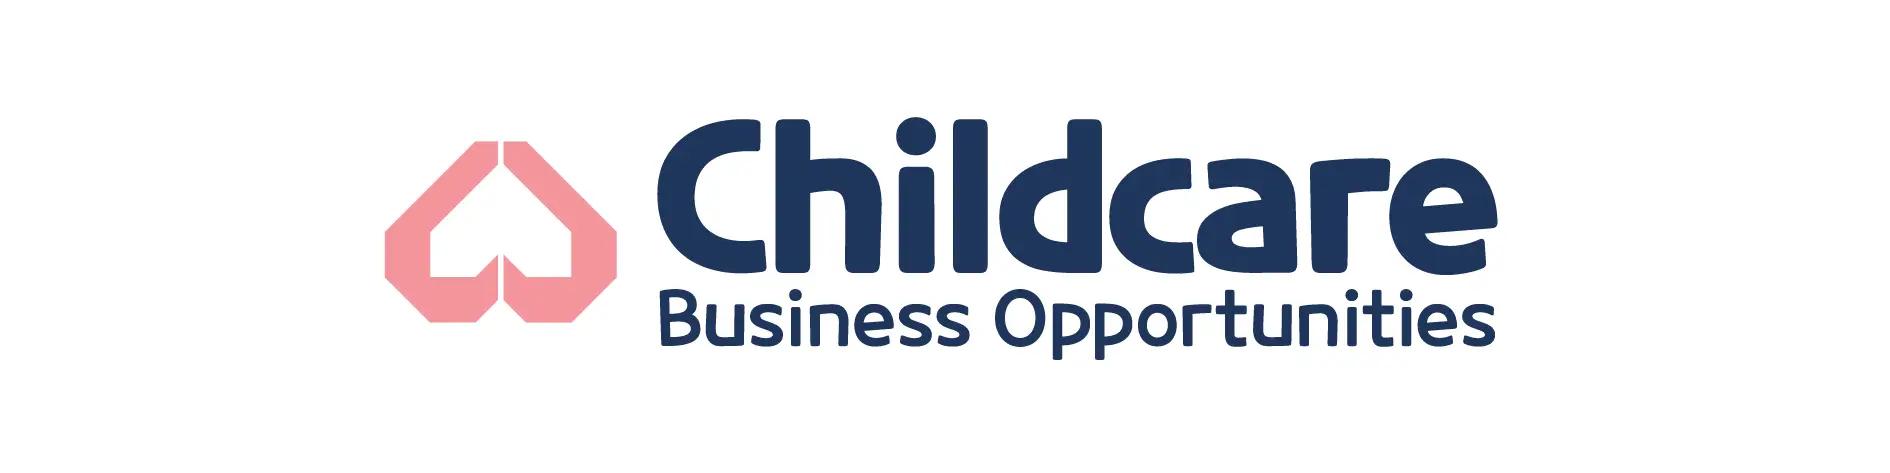 Childcare_Logo-01